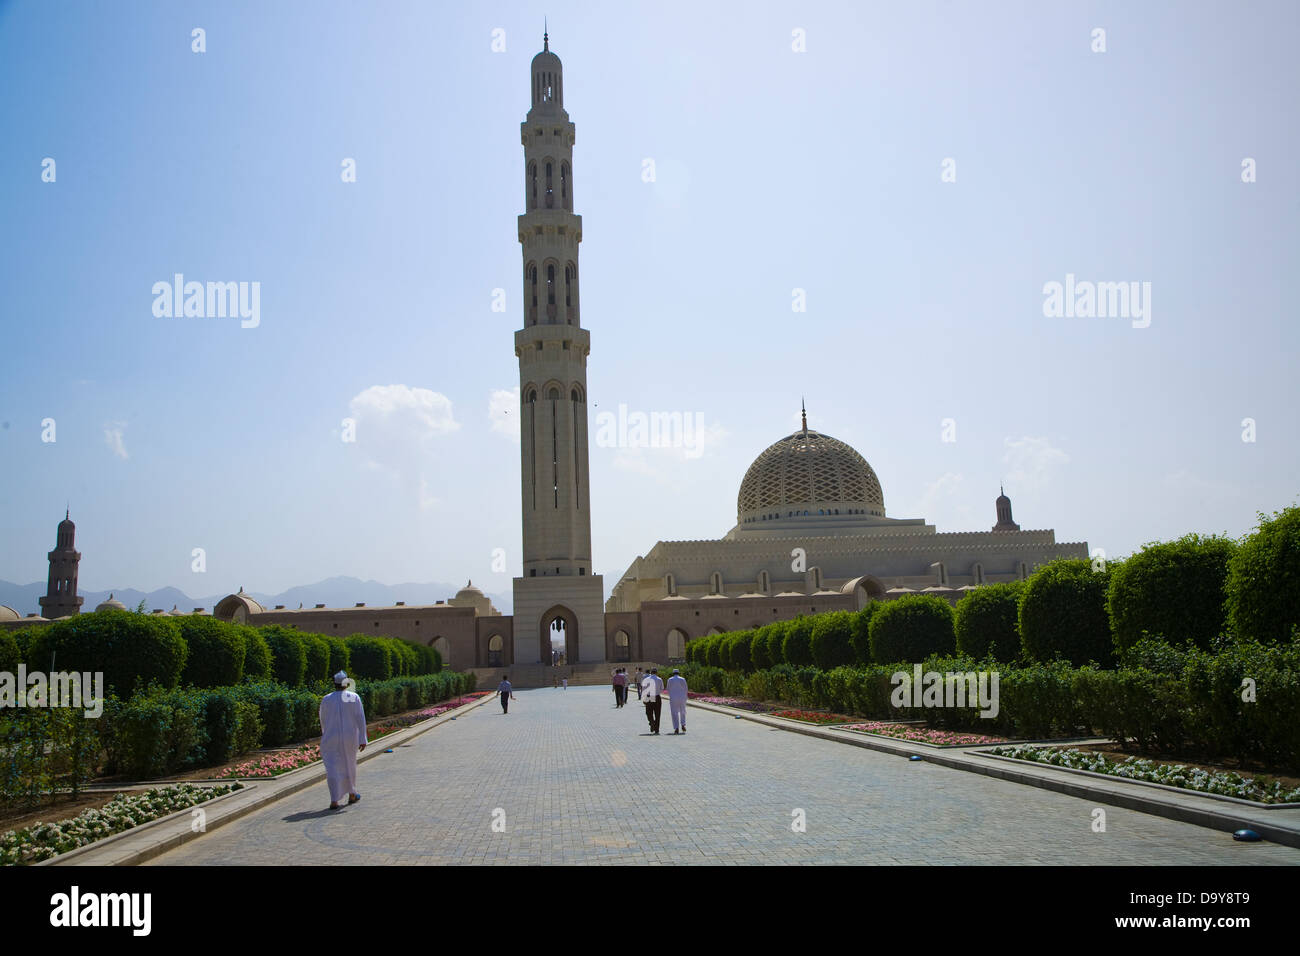 Ghala & Al-Ghubrah, im Volksmund bekannt als die große Moschee, Muscat, Oman. Stockfoto